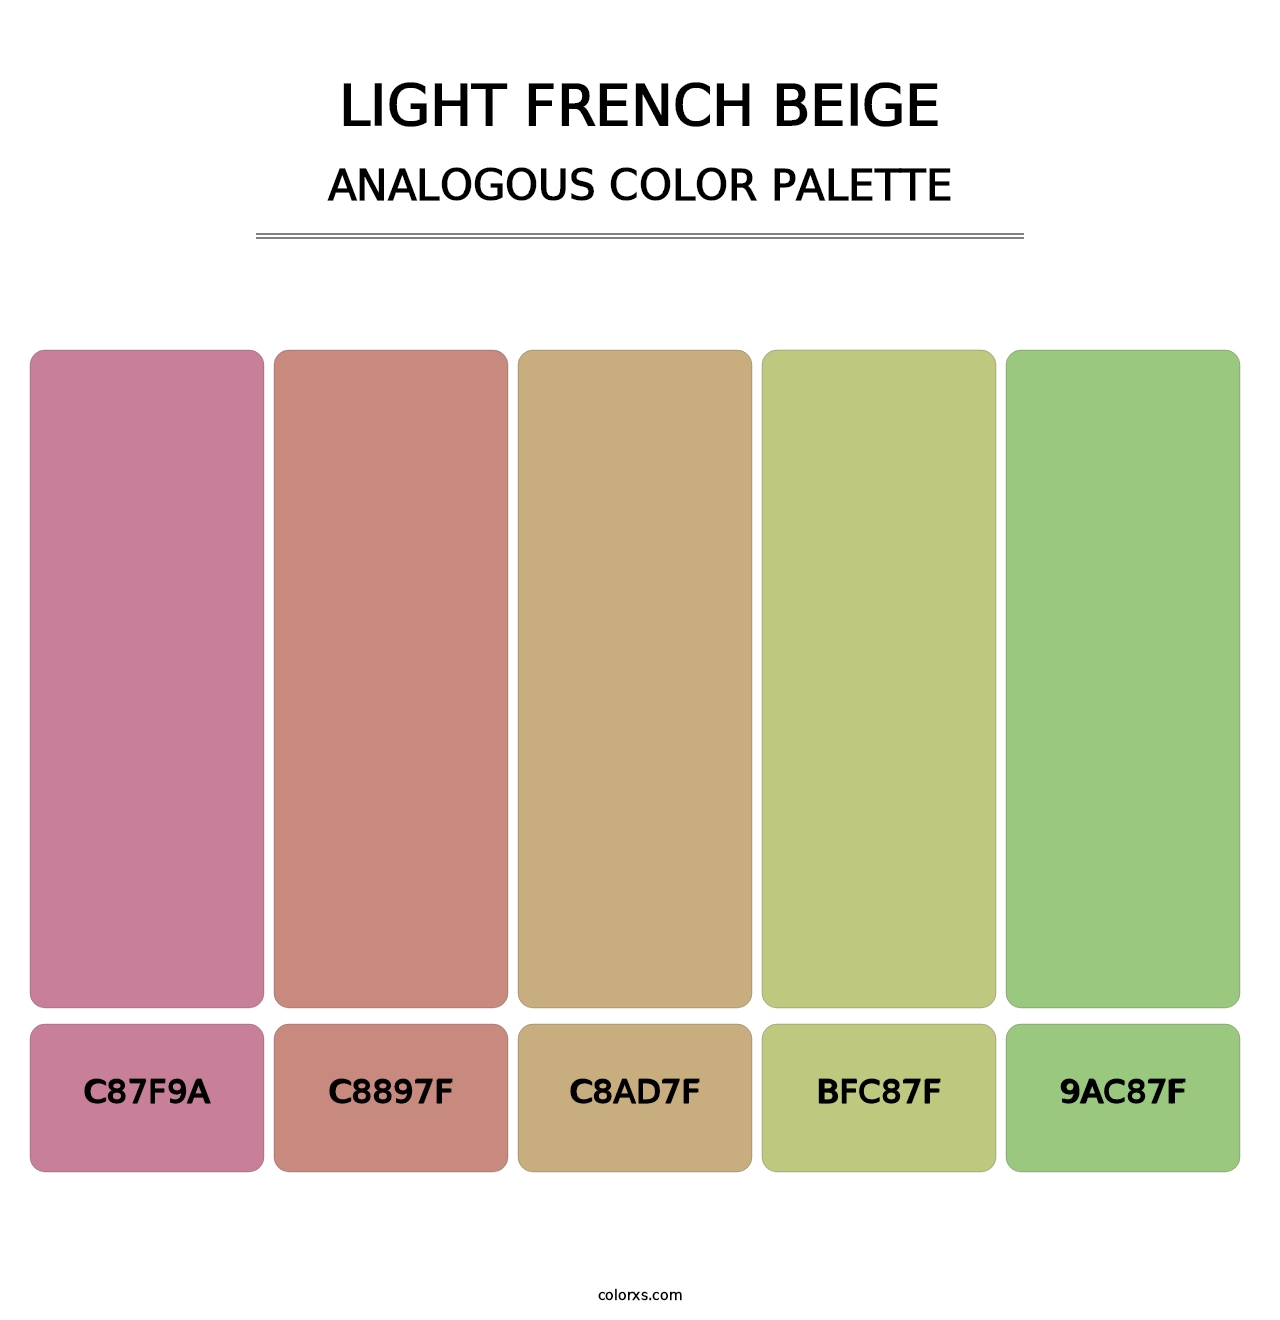 Light French Beige - Analogous Color Palette